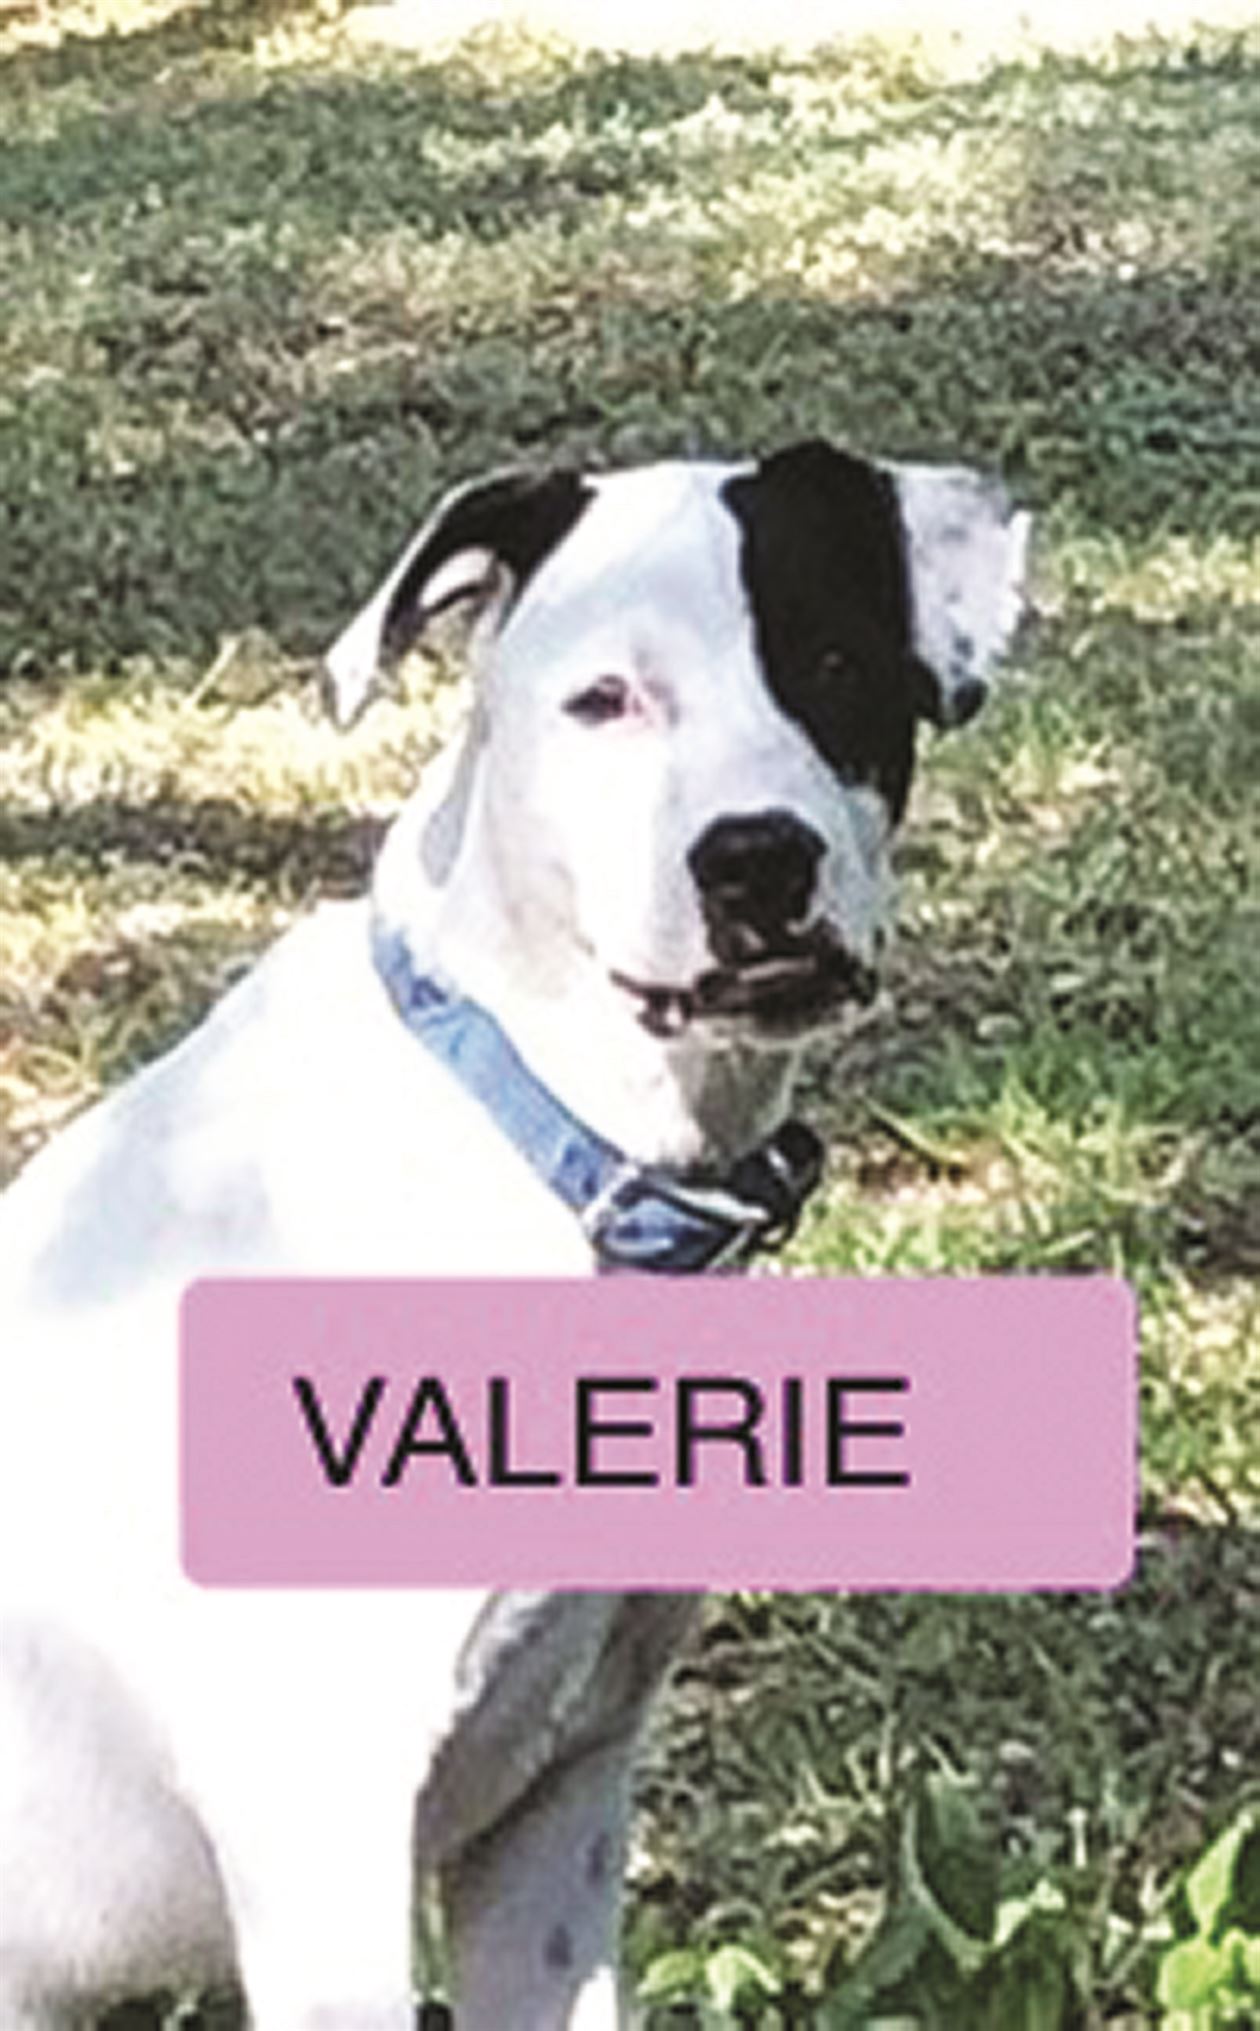 Valerie - adoptable pit bull terrier - san diego, california